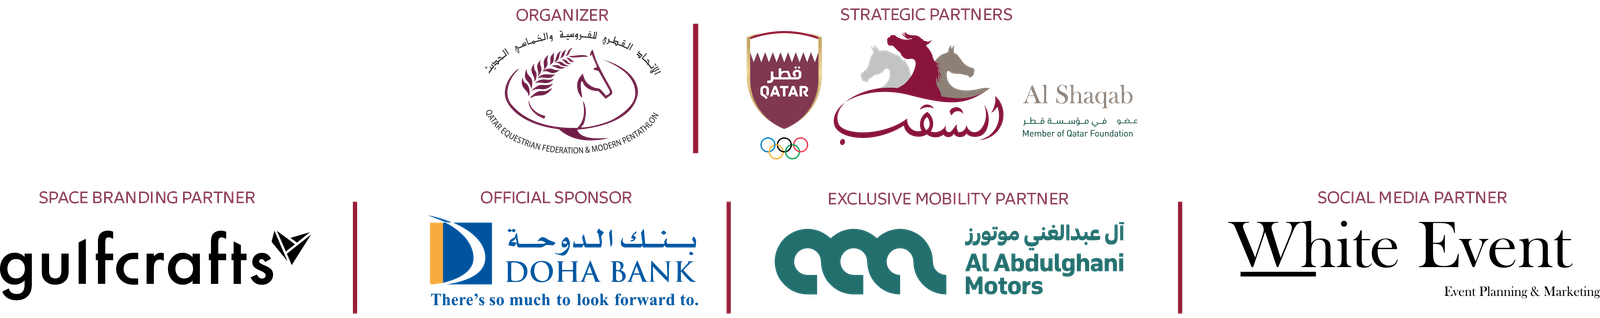 qatar doha tour